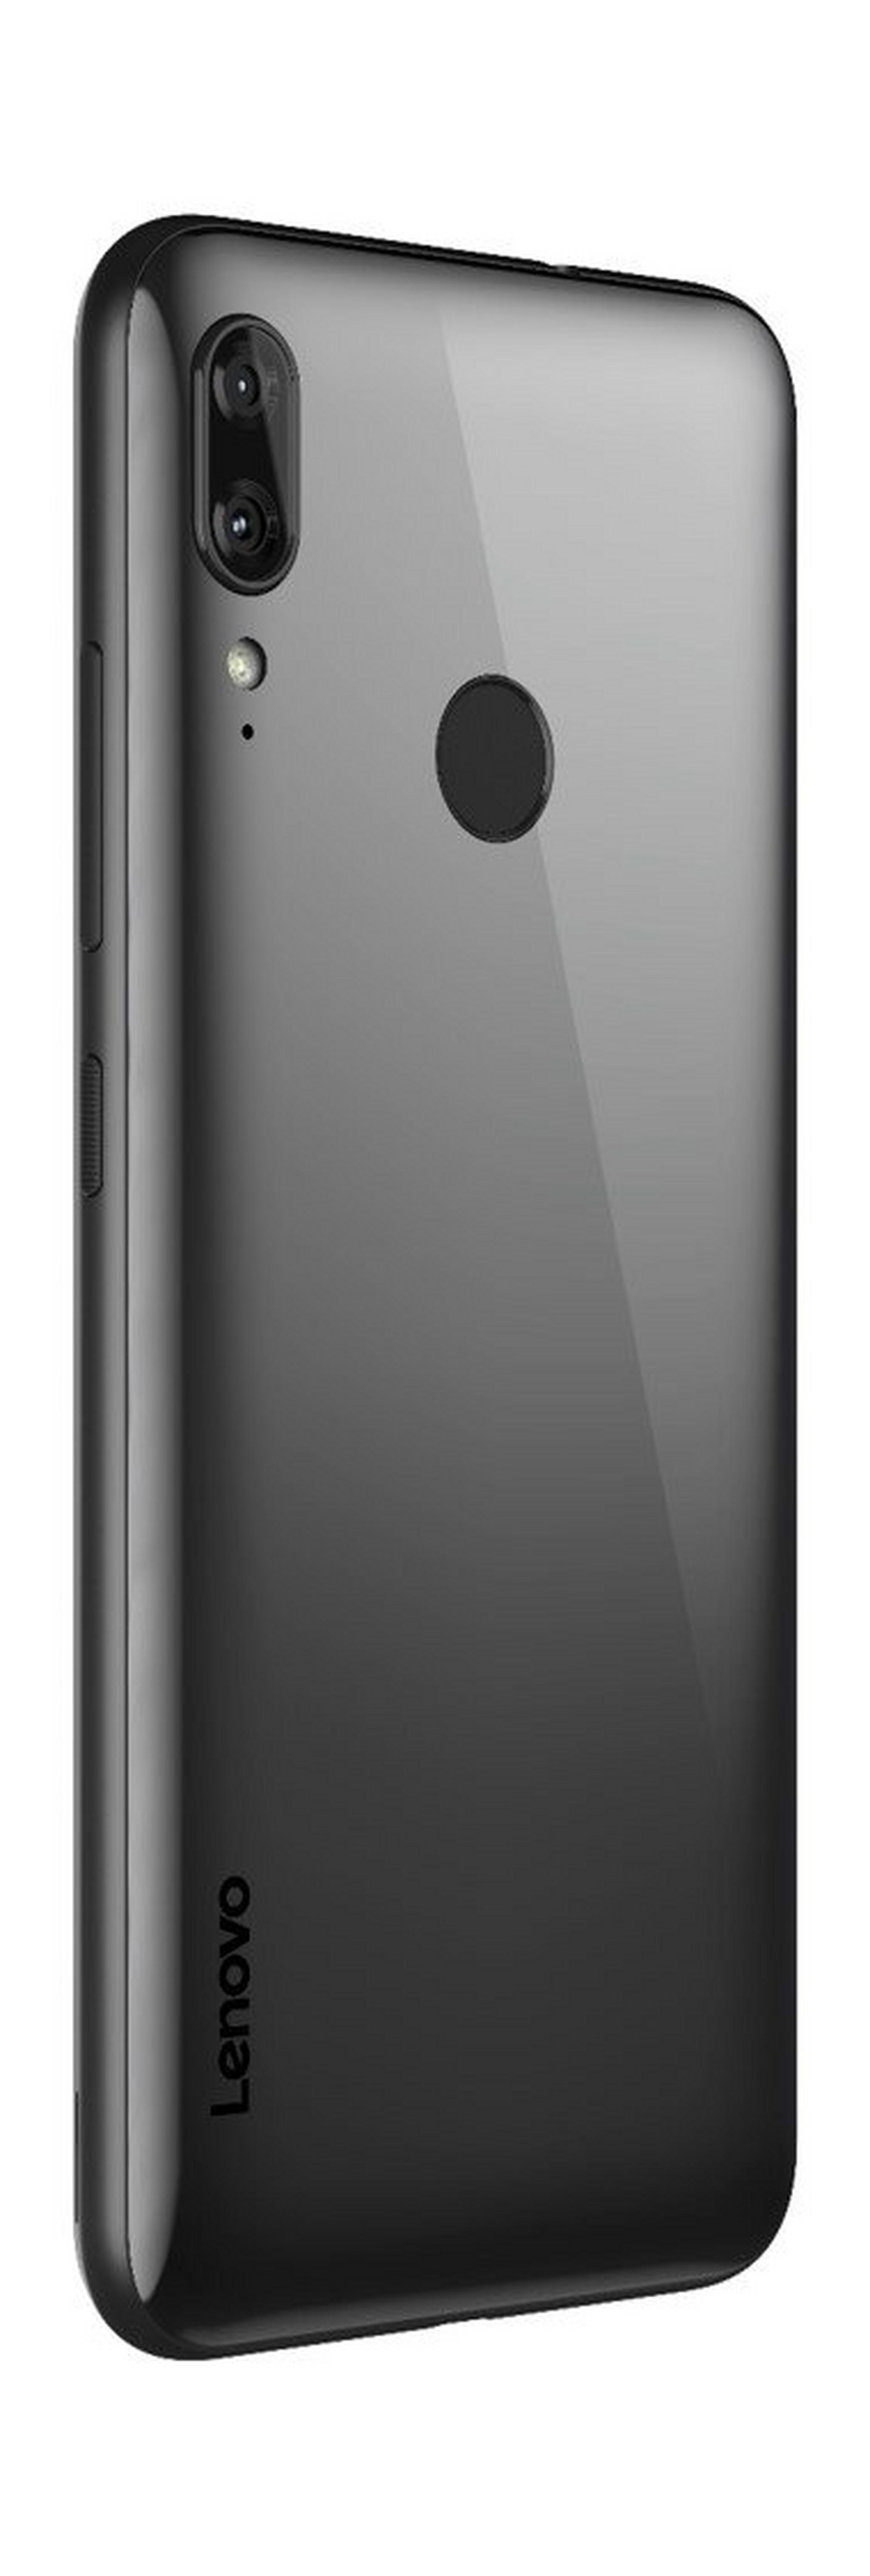 Lenovo K10 64GB Phone - Graphite